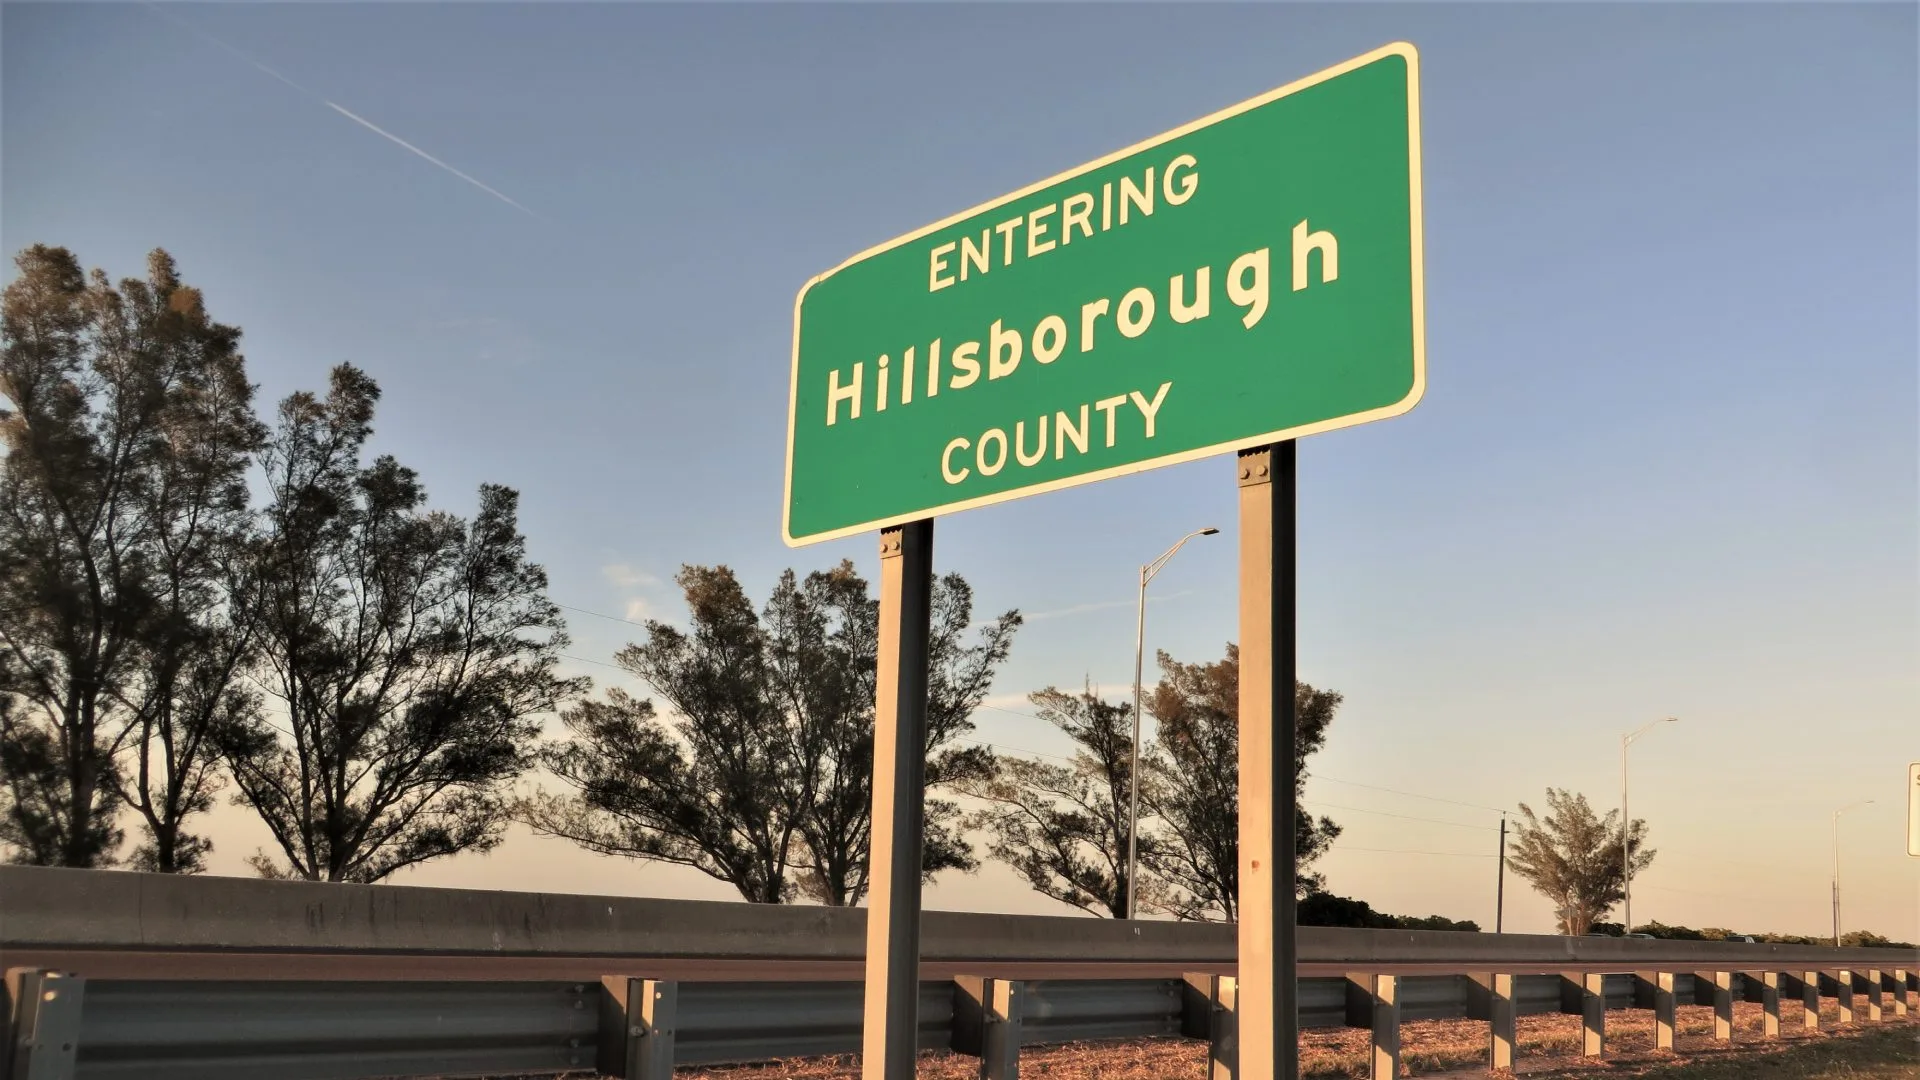 Signage for Hillsborough County, FL.